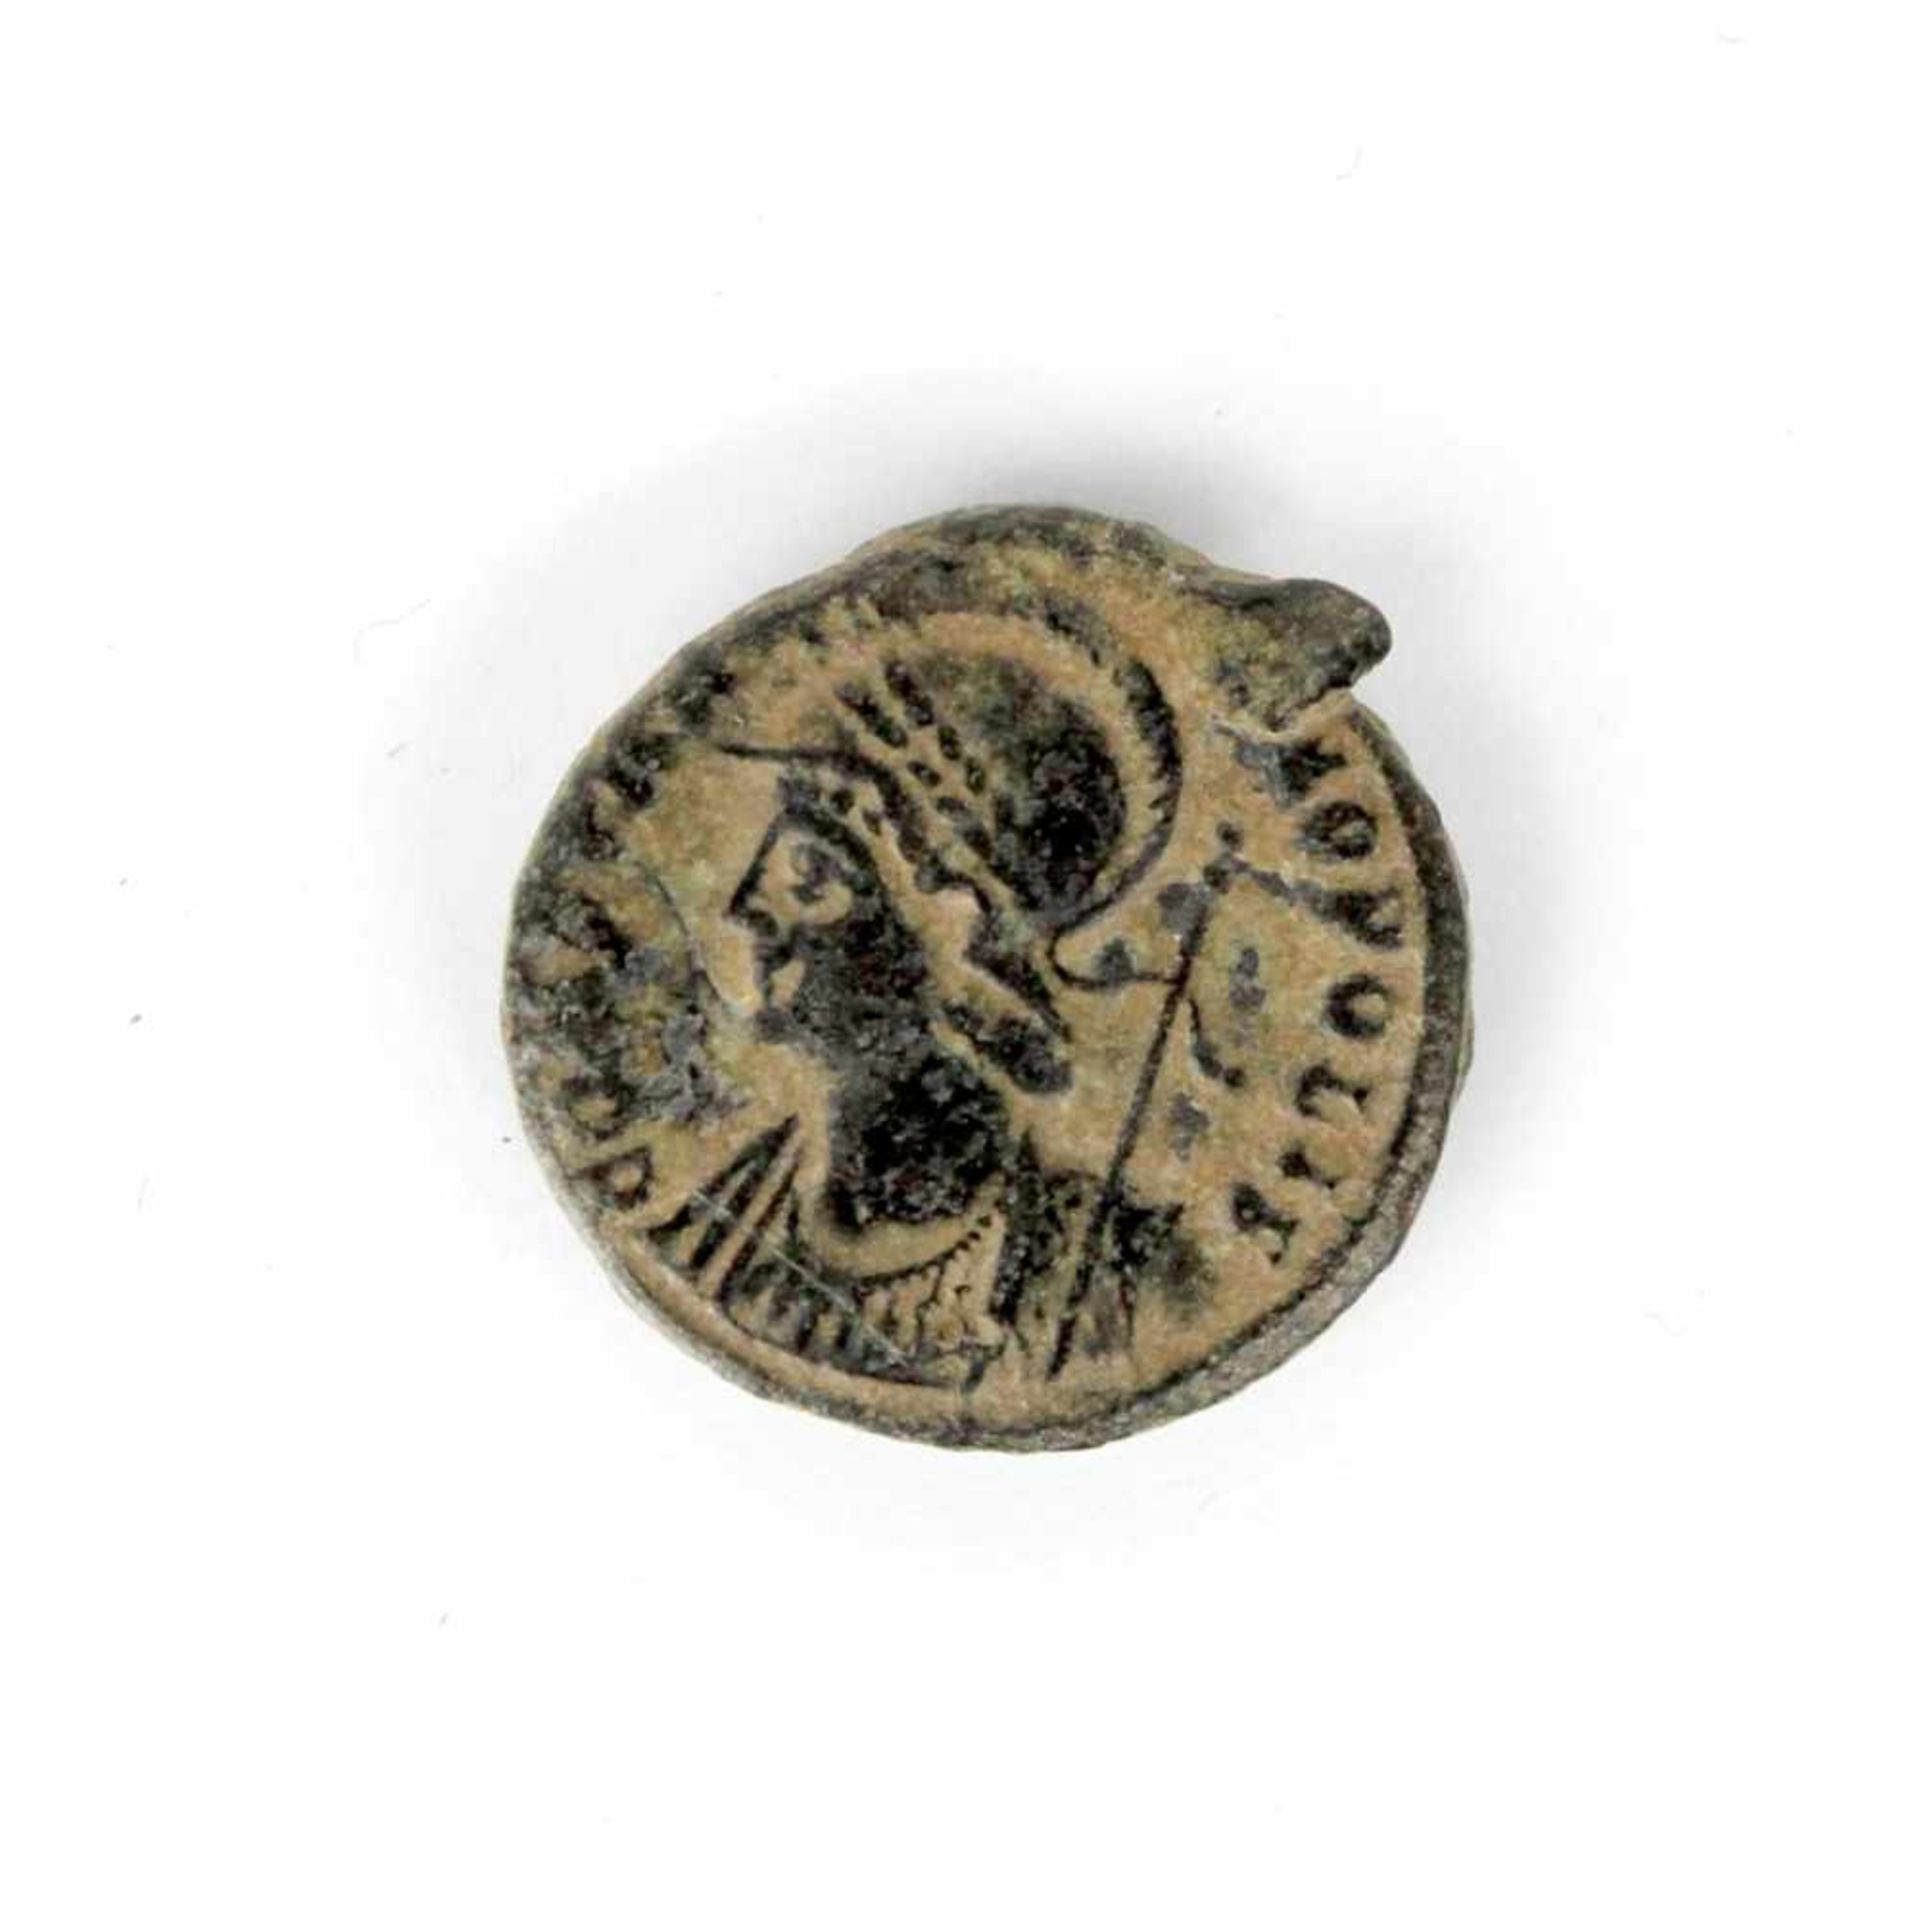 Originale römische Münze " Konstantin der Große "<br